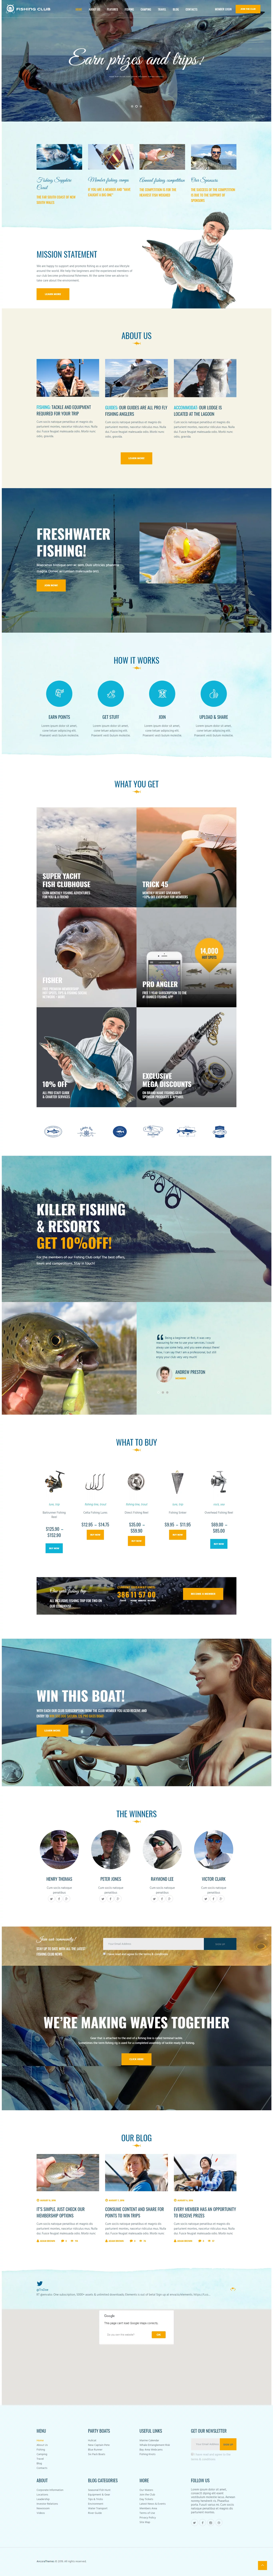 Fishing Club - Best Premium Outdoor Activities WordPress Theme